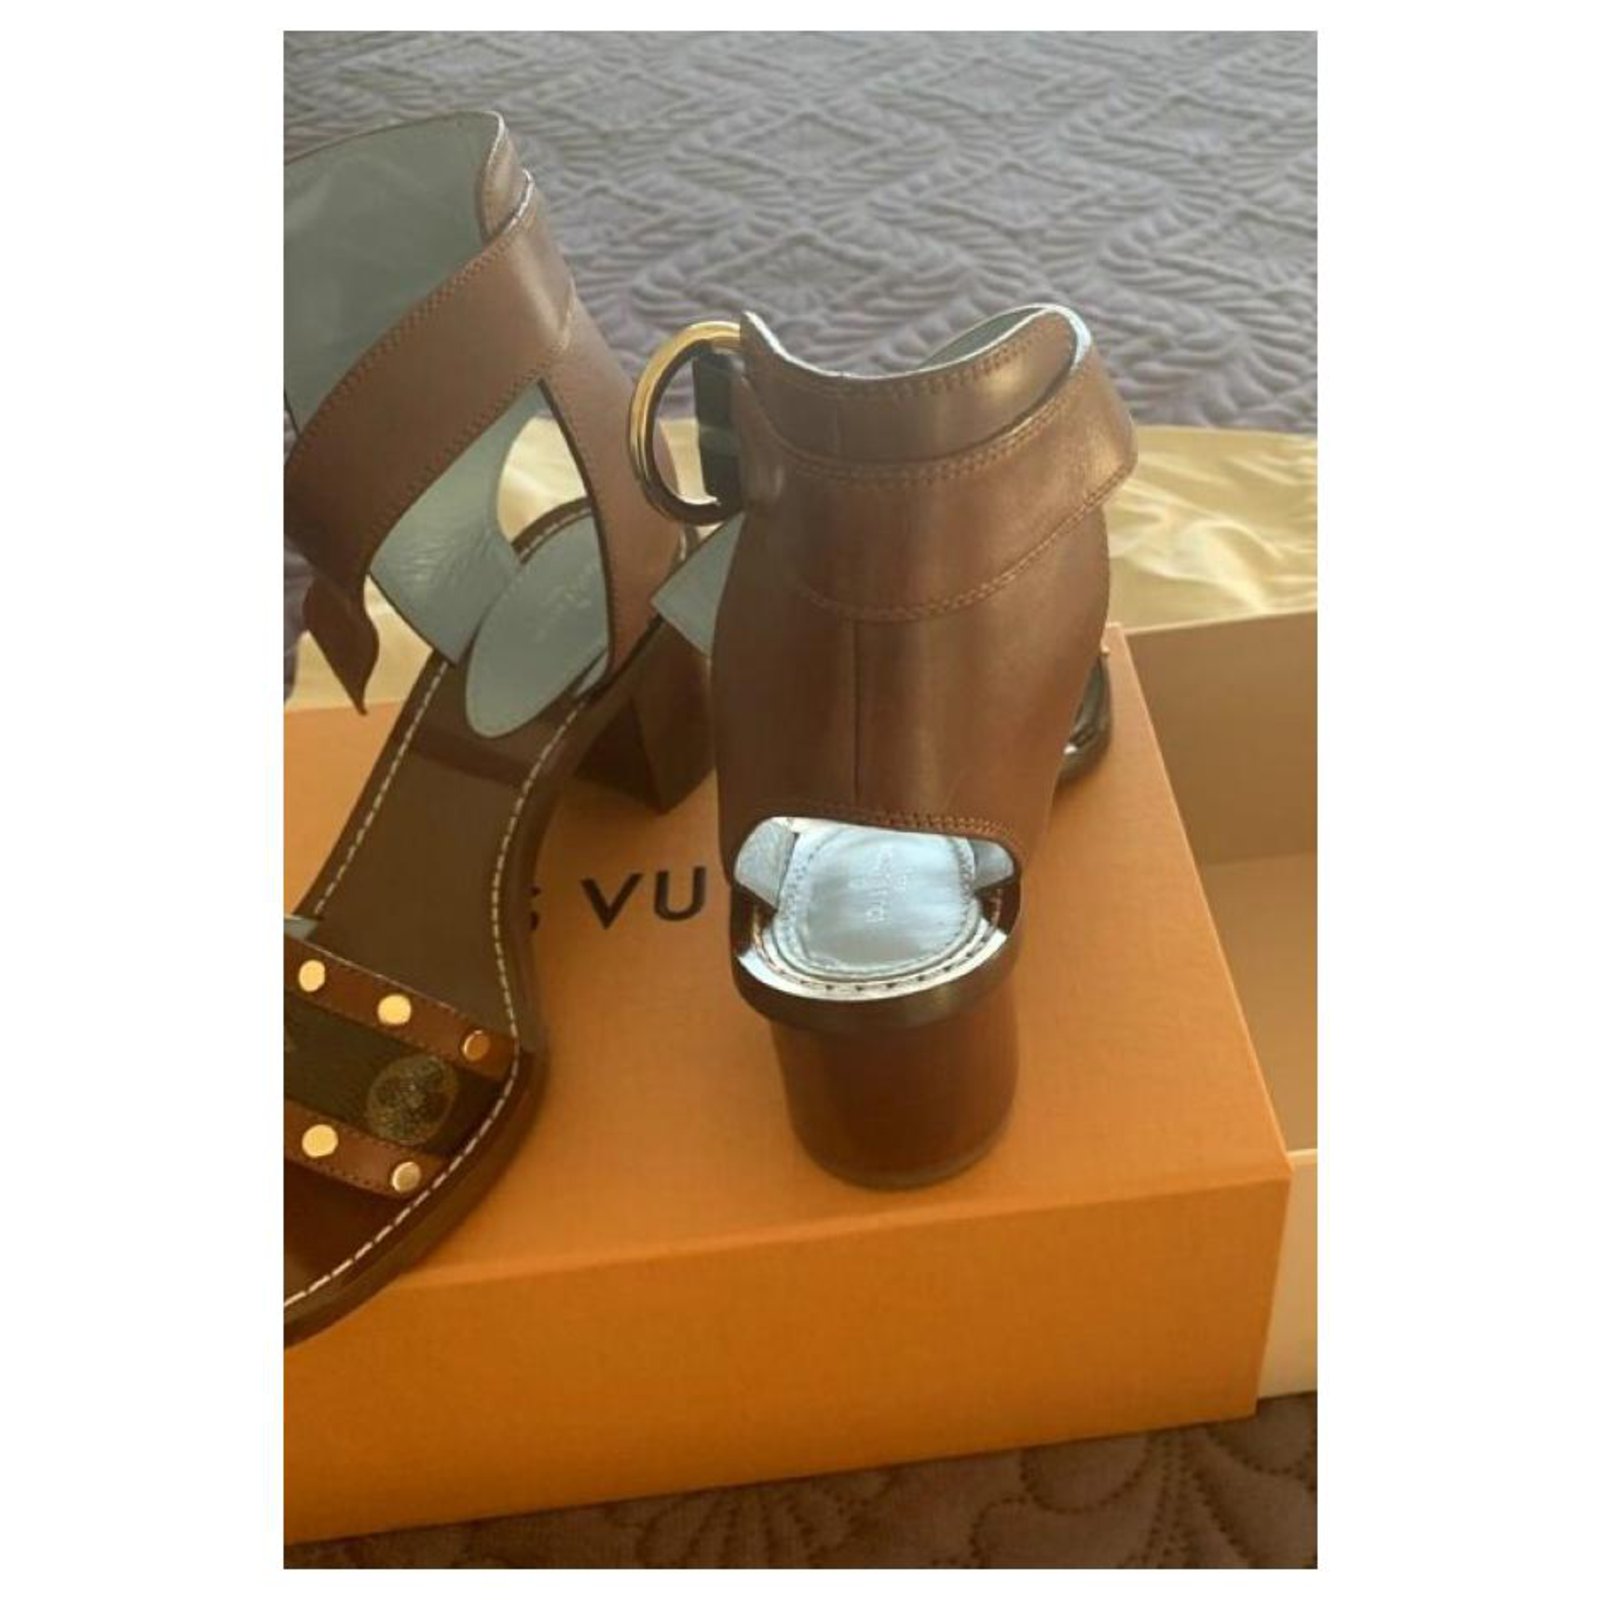 Louis Vuitton Passenger Sandal in Brown